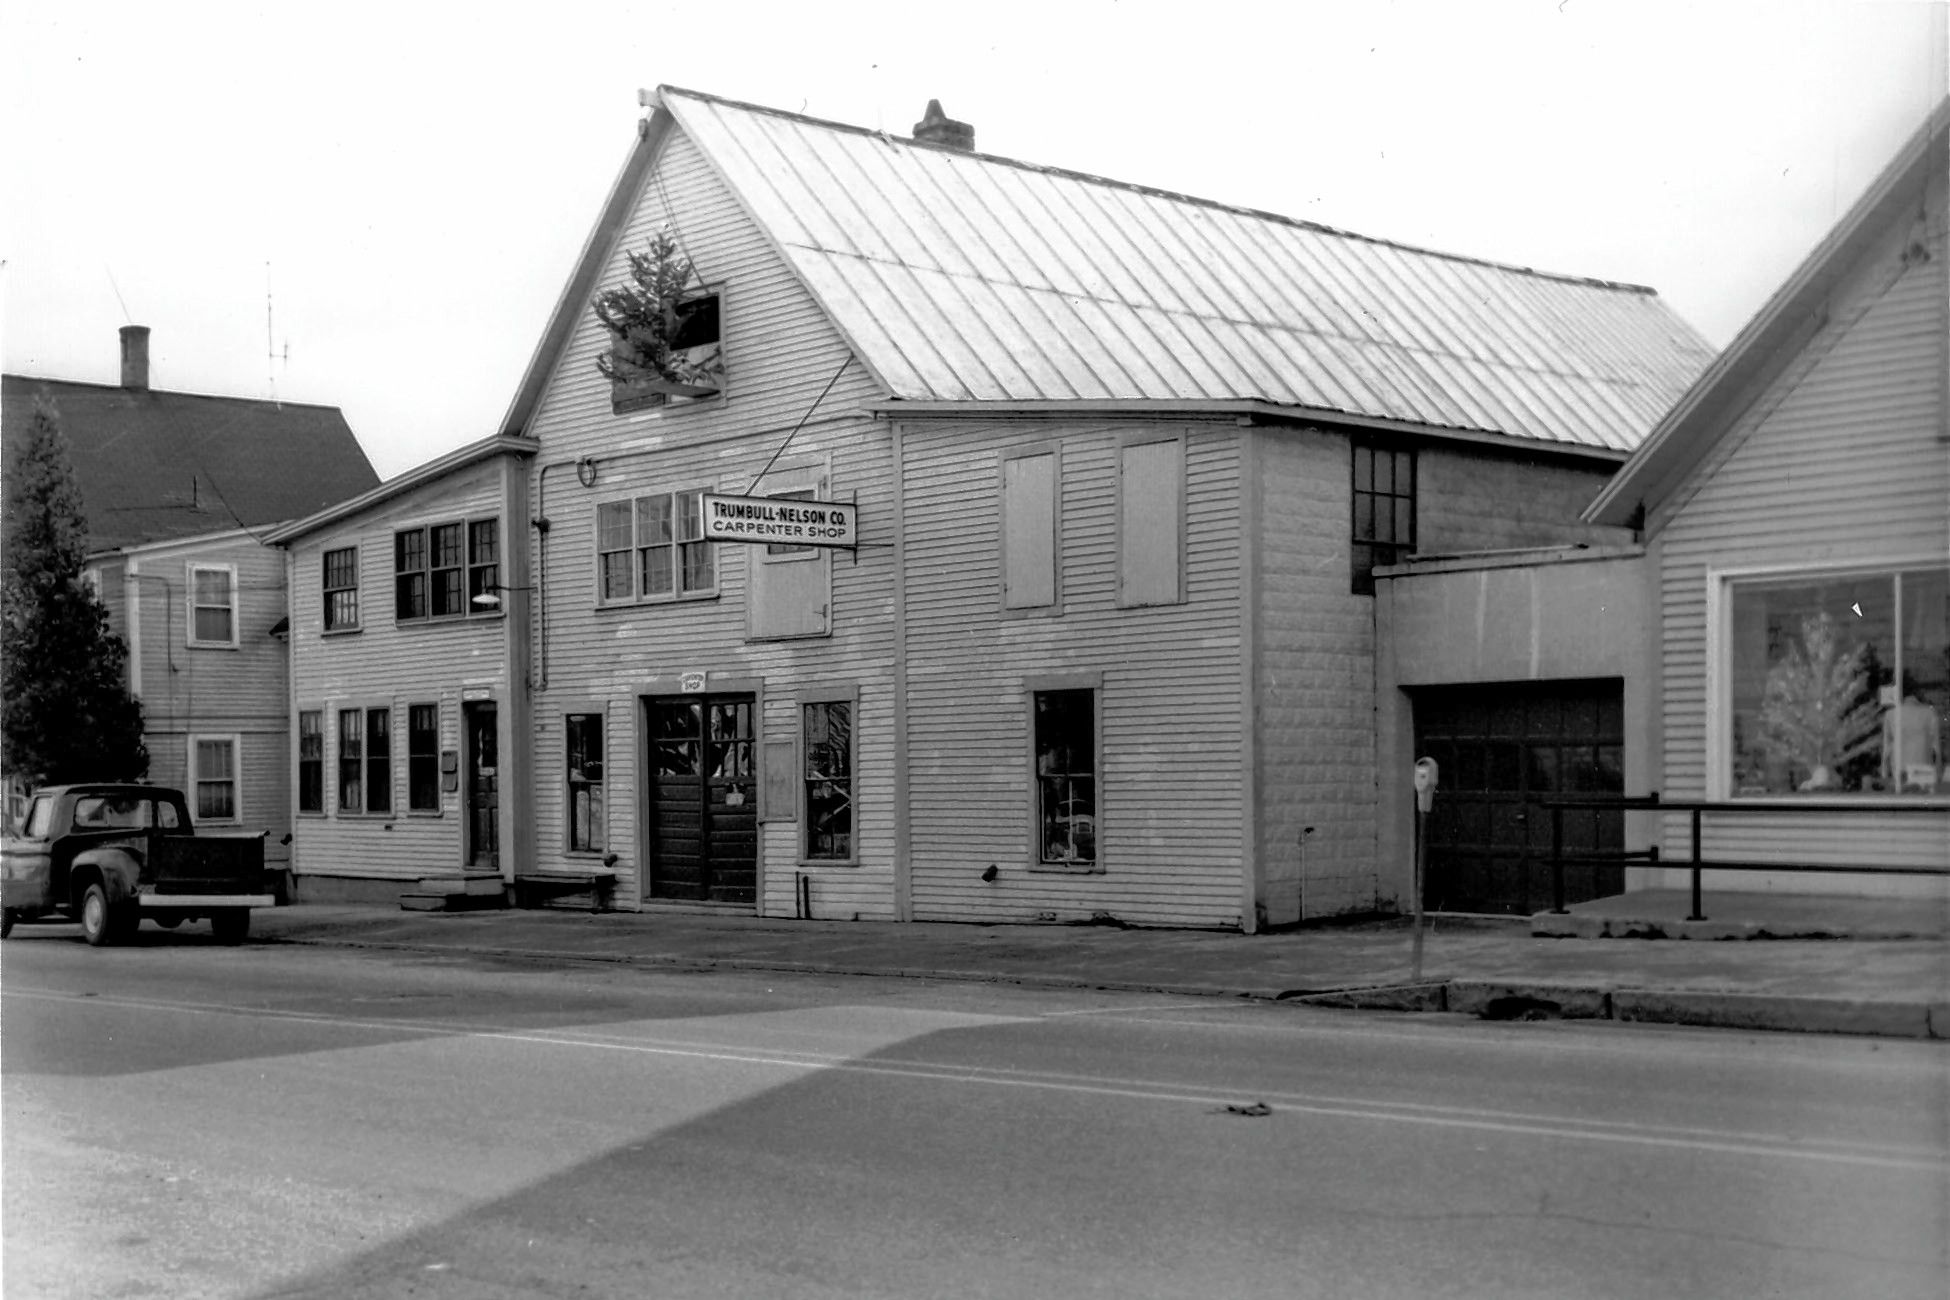 The Trumbull-Nelson Construction Co. headquarters at 7-9 Lebanon Street in Hanover in 1956. The buildings were razed in 1970. (Photograph courtesy of Frank J. Barrett Jr.)